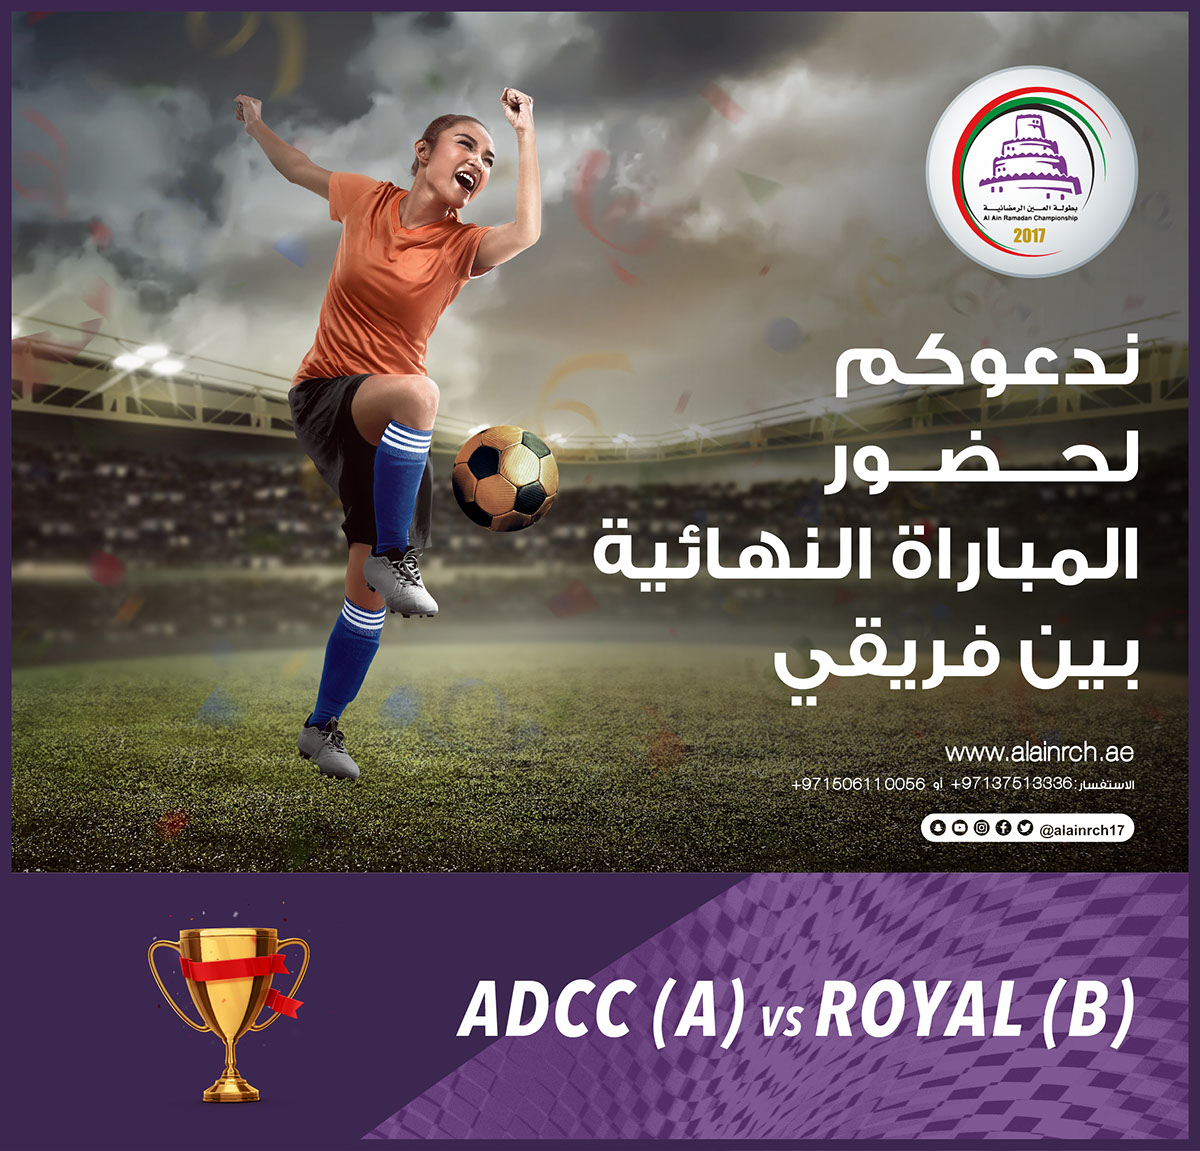 sports Event arabic UAE ramadan football athletics emirates Championship social media